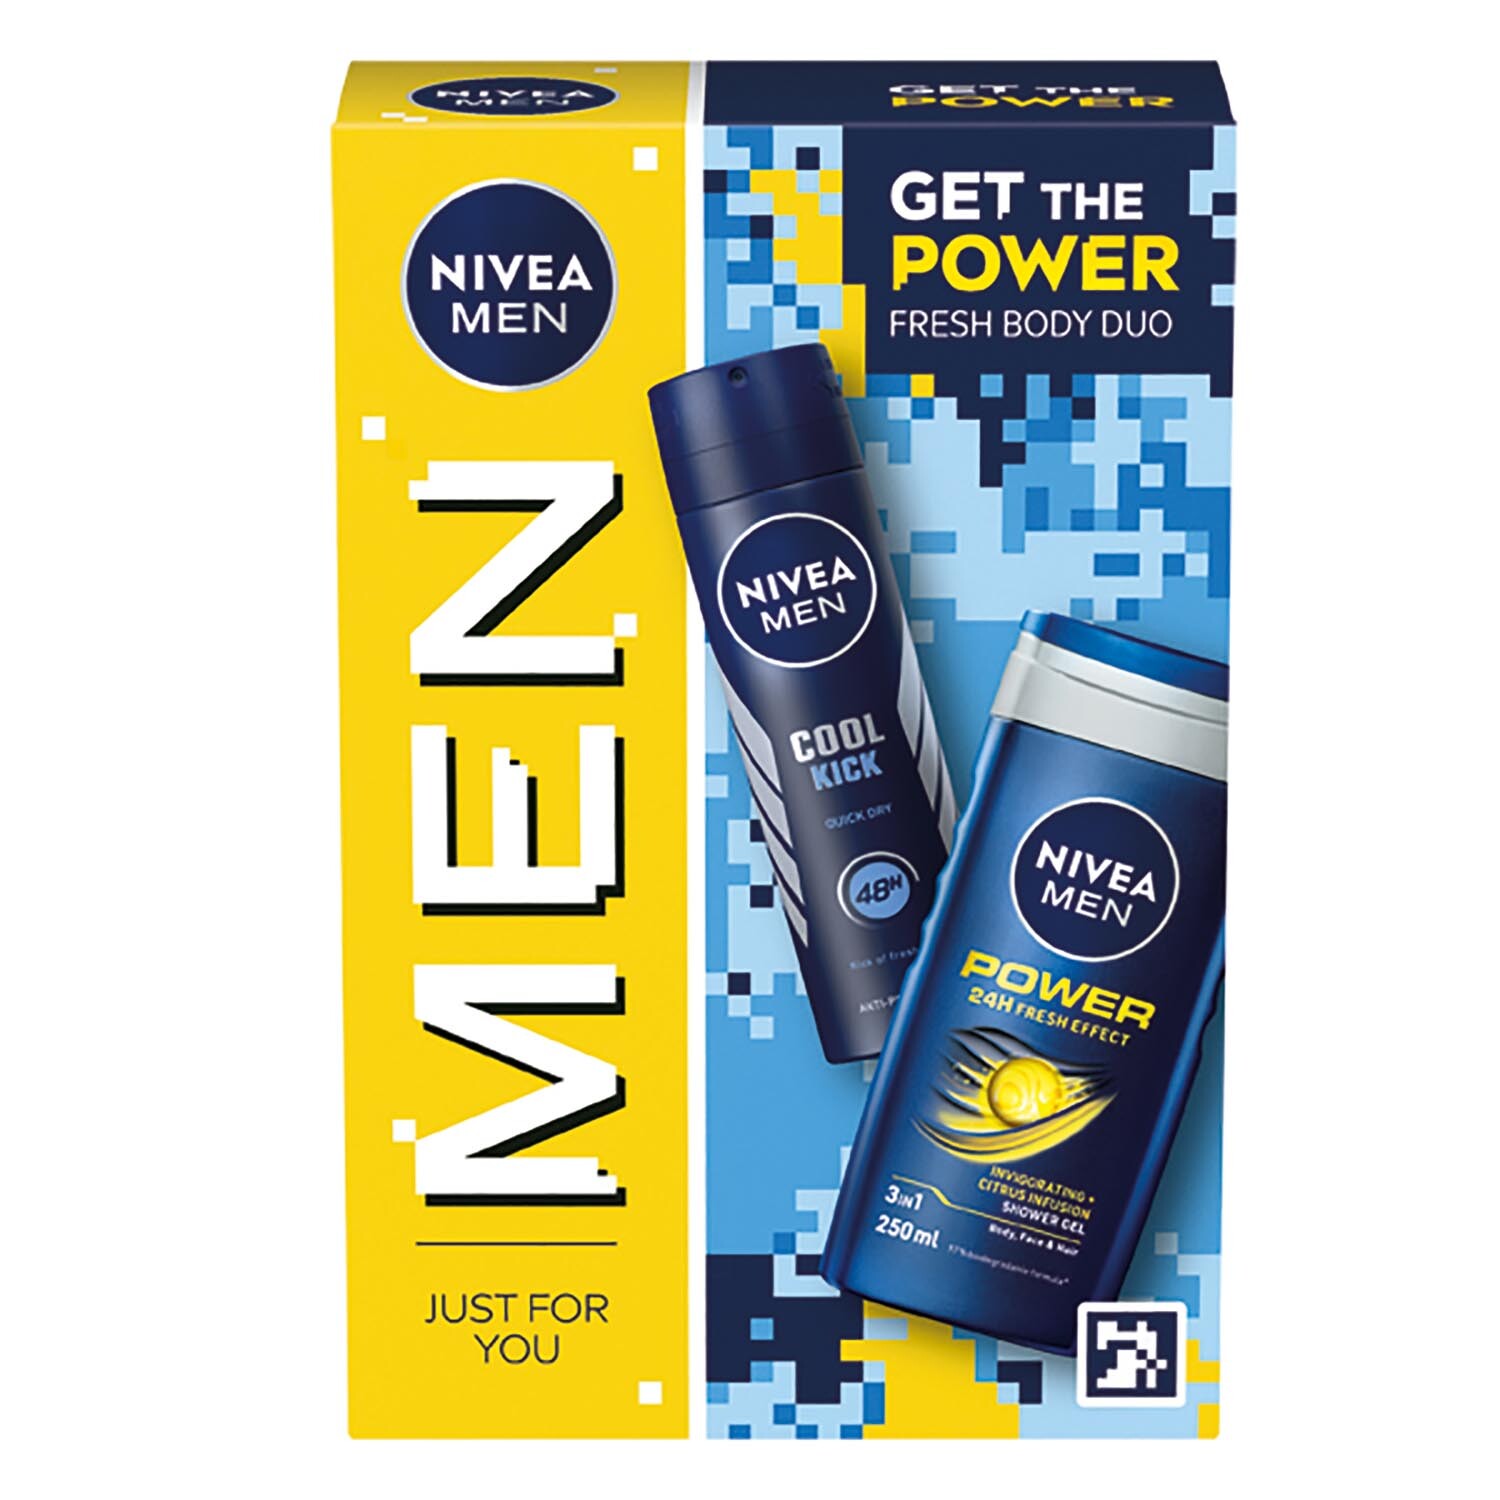 Nivea Men Get the Power Fresh Body Duo - Blue Image 2